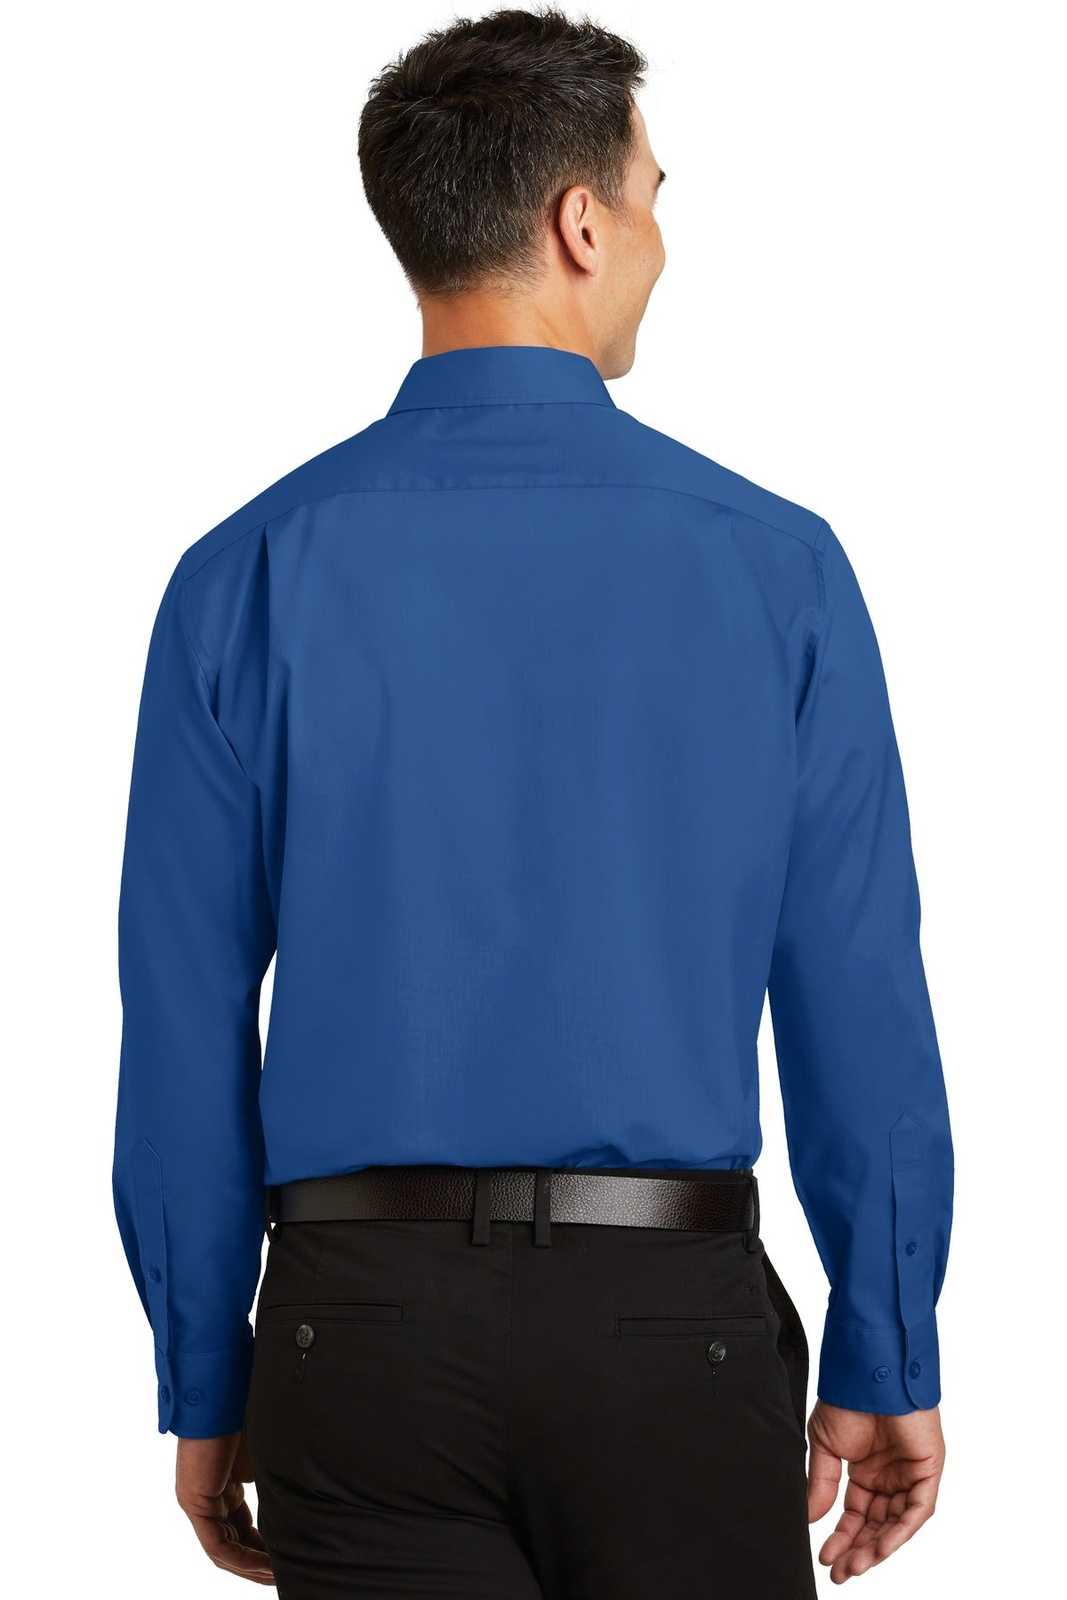 Port Authority S663 Superpro Twill Shirt - True Blue - HIT a Double - 1